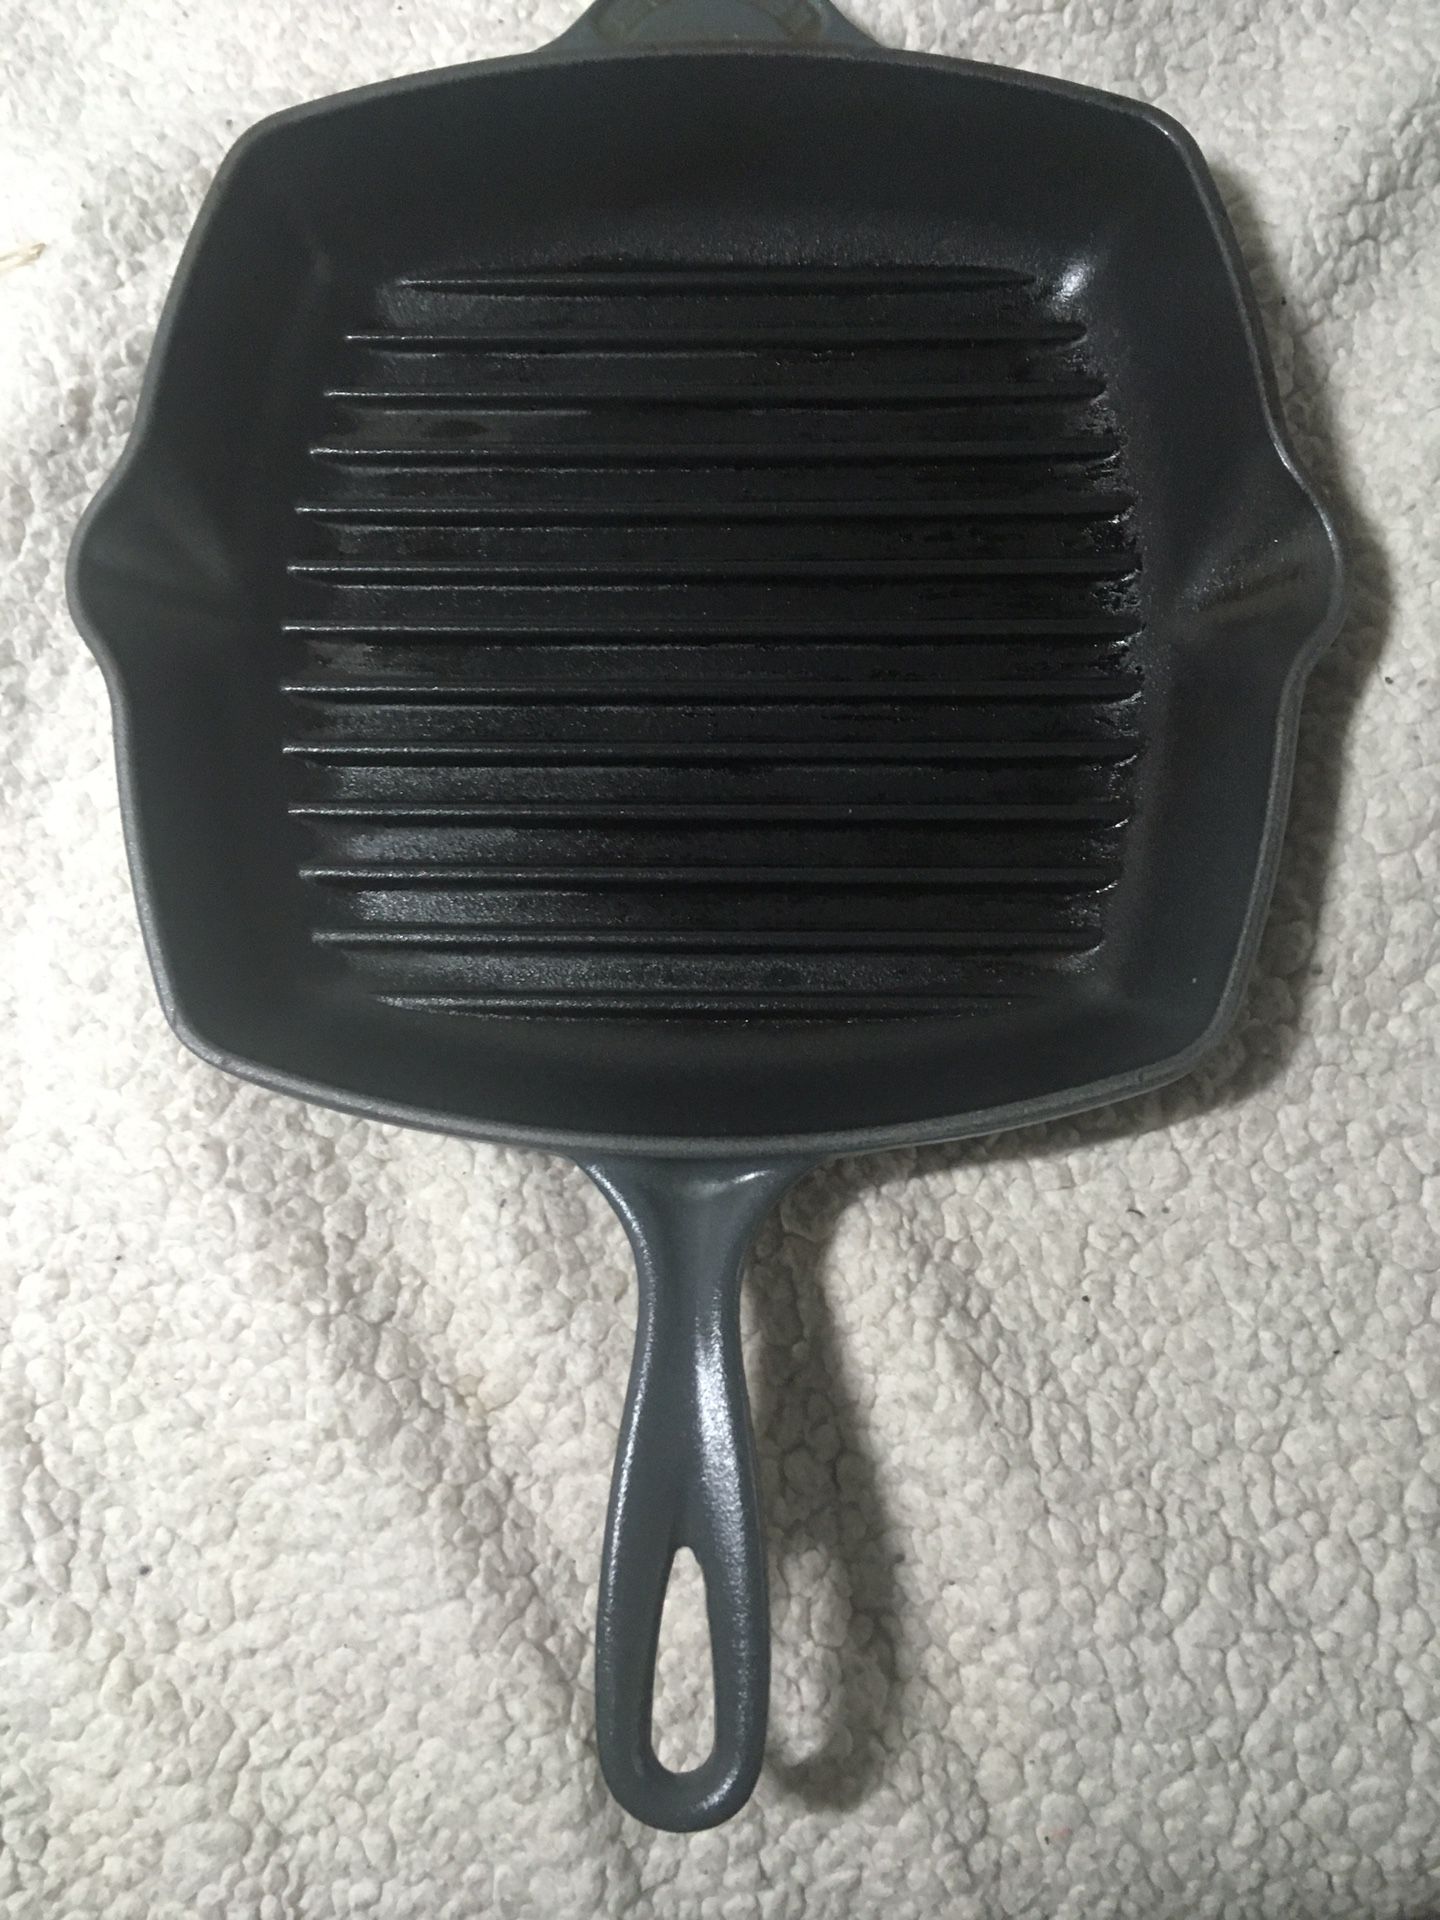 Le Creuset cast iron grill pan